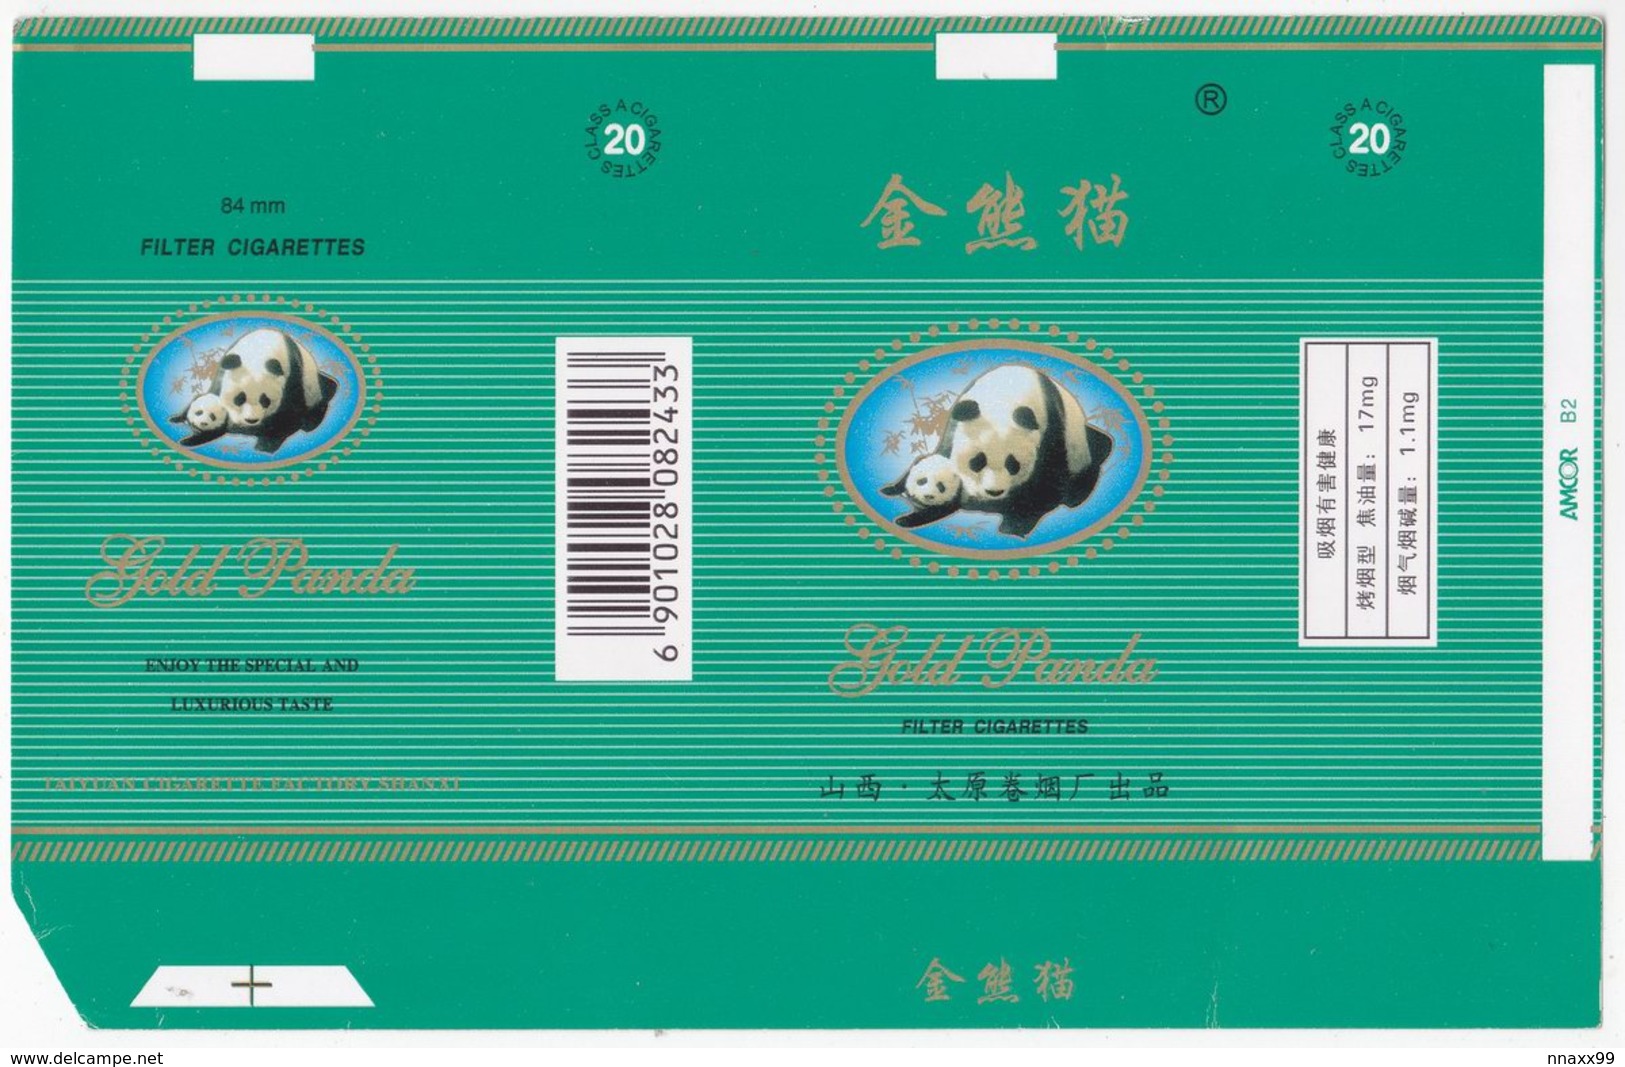 Panda - Giant Panda, GOLD PANDA Cigarette Box, Soft, Sea-GN Inlaid WT-thread, Taiyuan Cigarette Factory, Shanxi, China - Empty Cigarettes Boxes